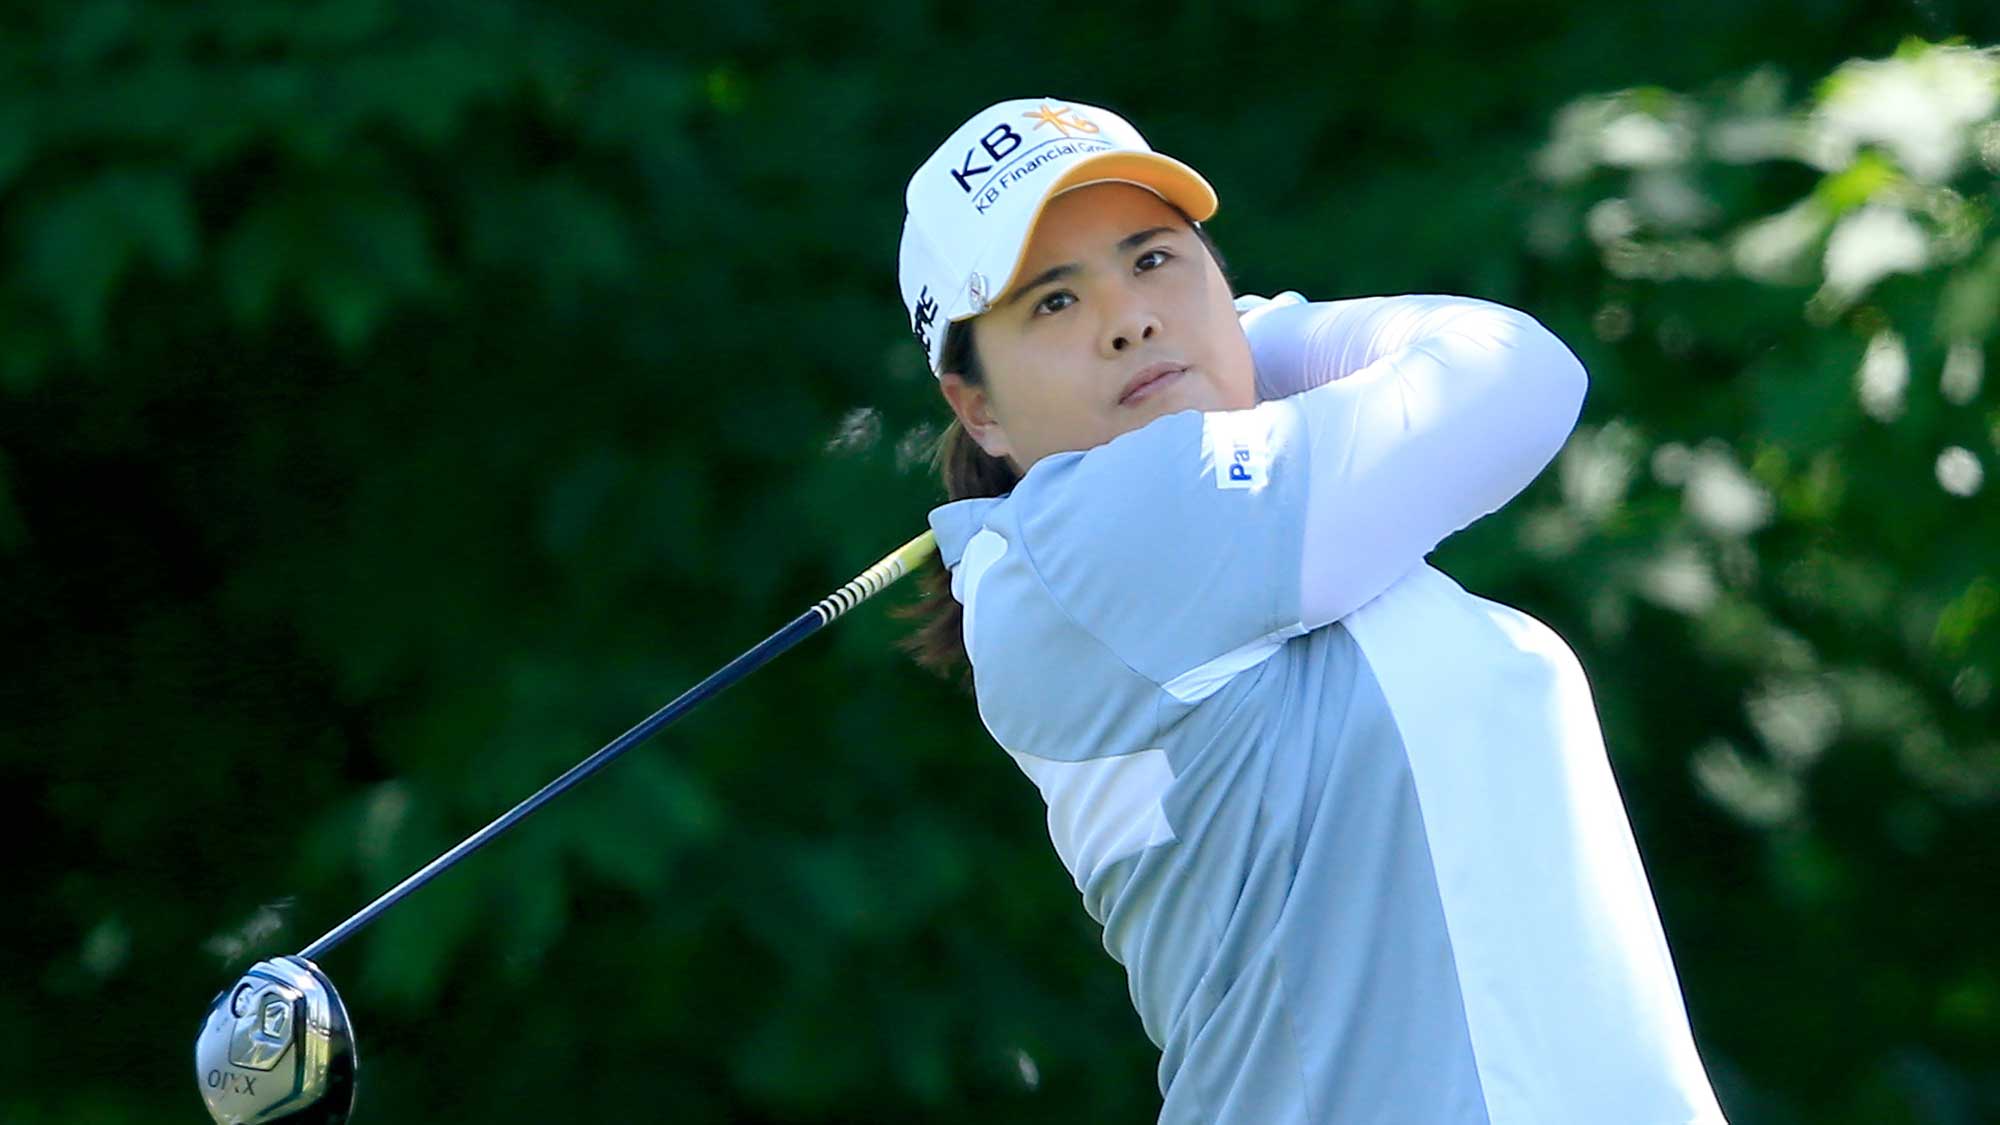 Park will have week off to enjoy major triumph, No. 1 ranking | LPGA ...